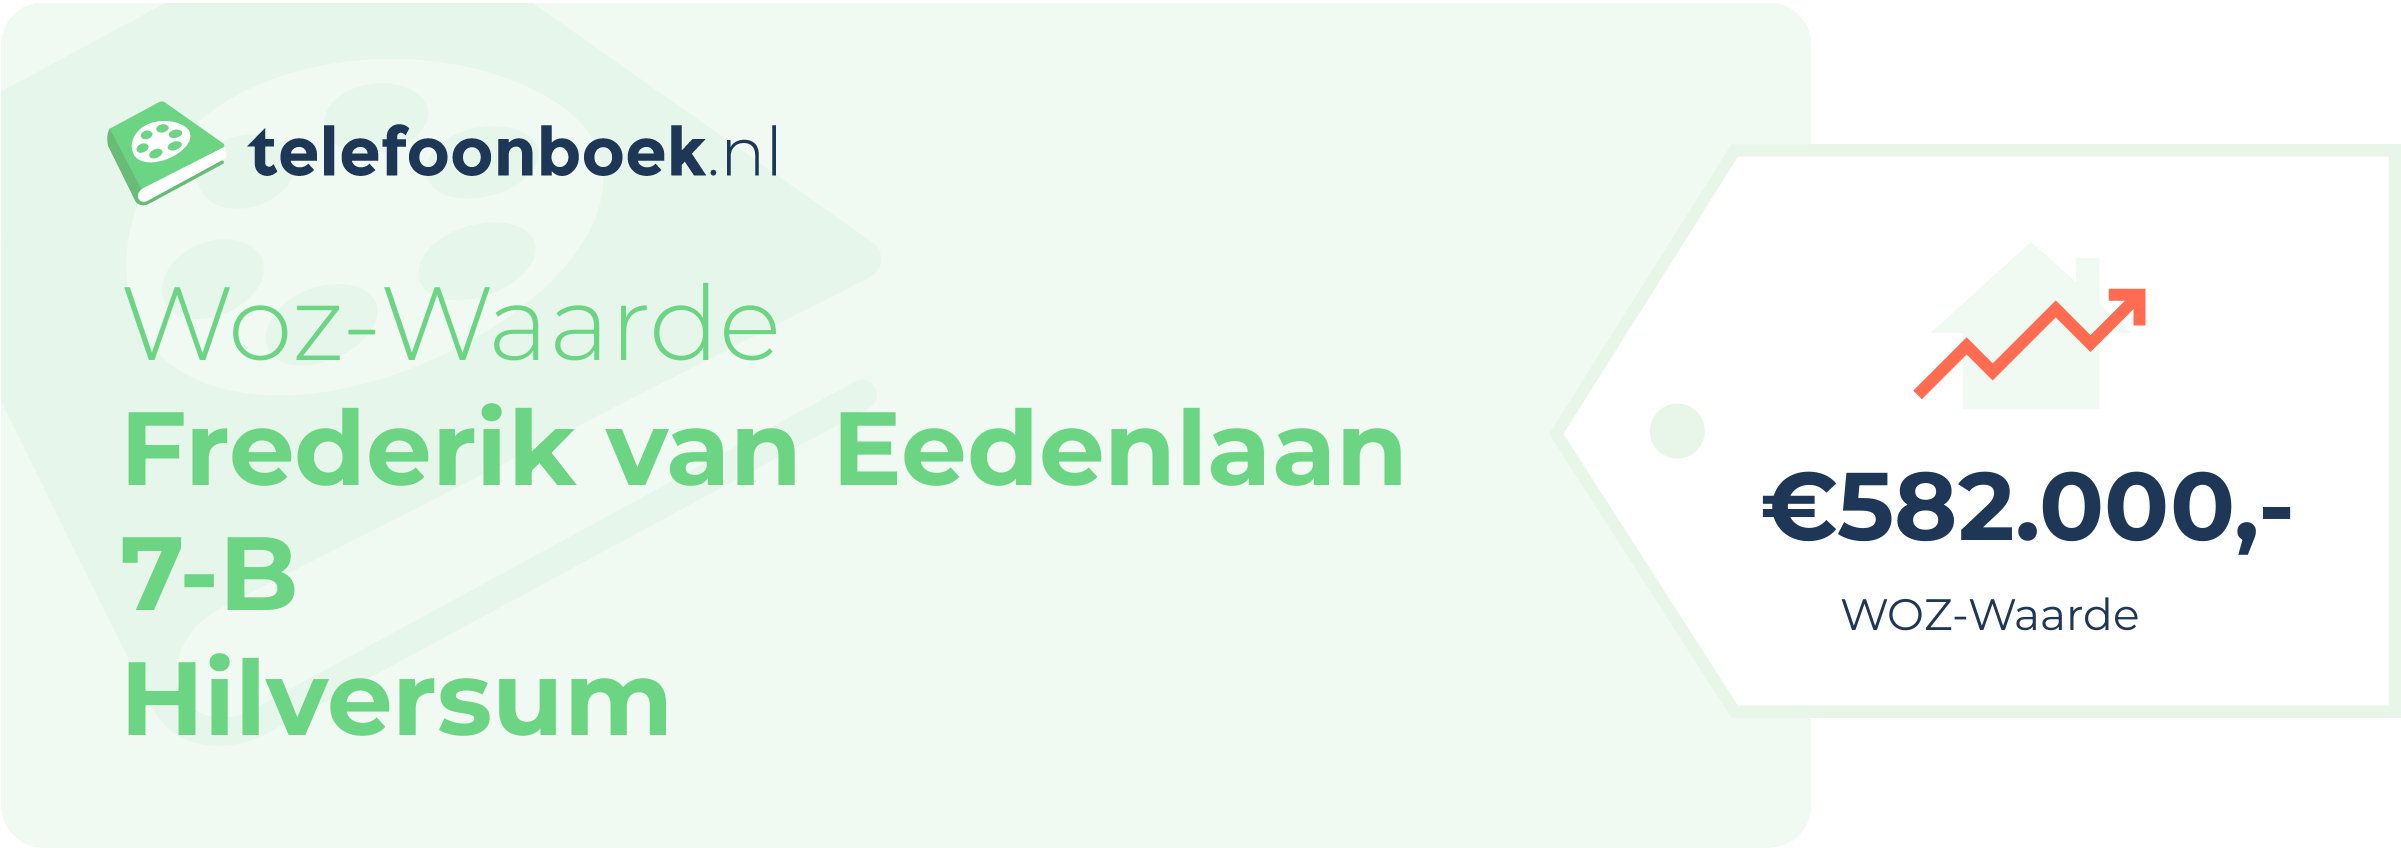 WOZ-waarde Frederik Van Eedenlaan 7-B Hilversum